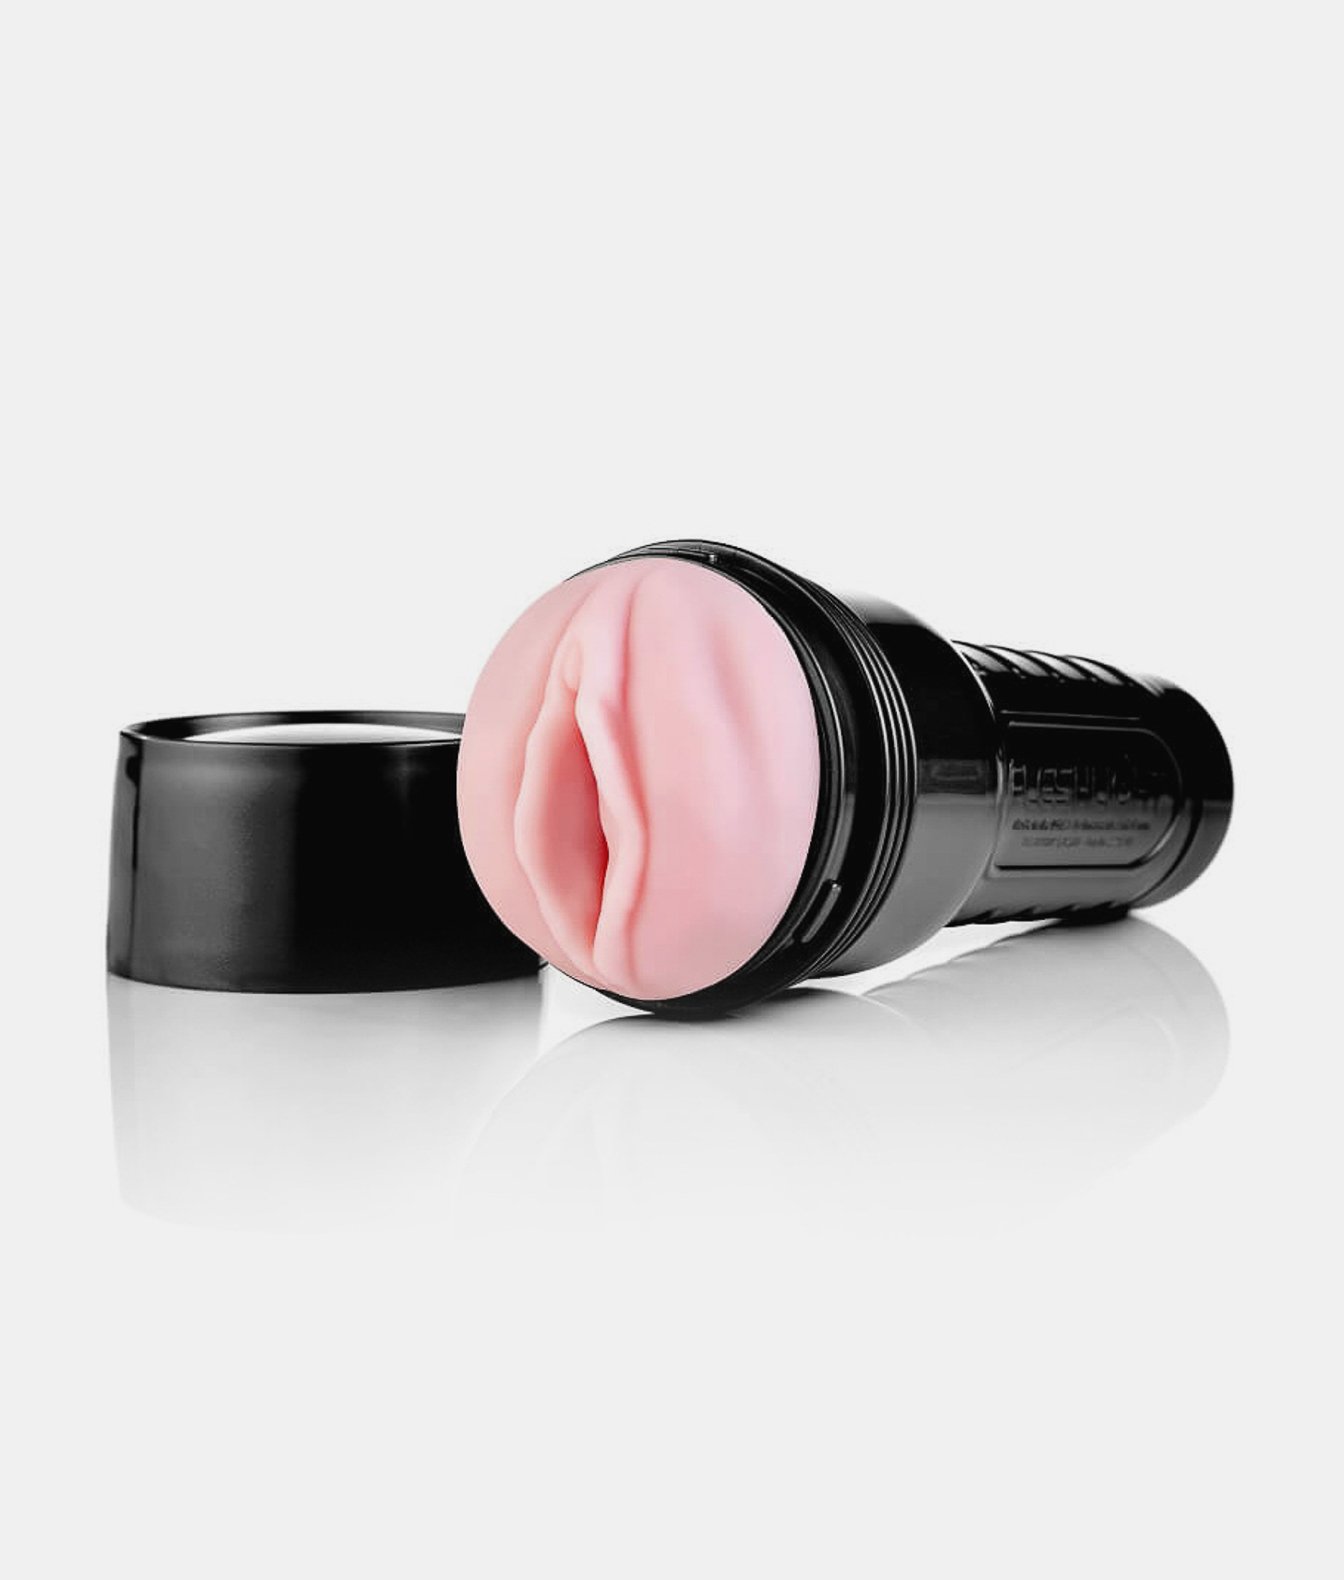 Fleshlight® Classic Pink Lady Vortex masturbator